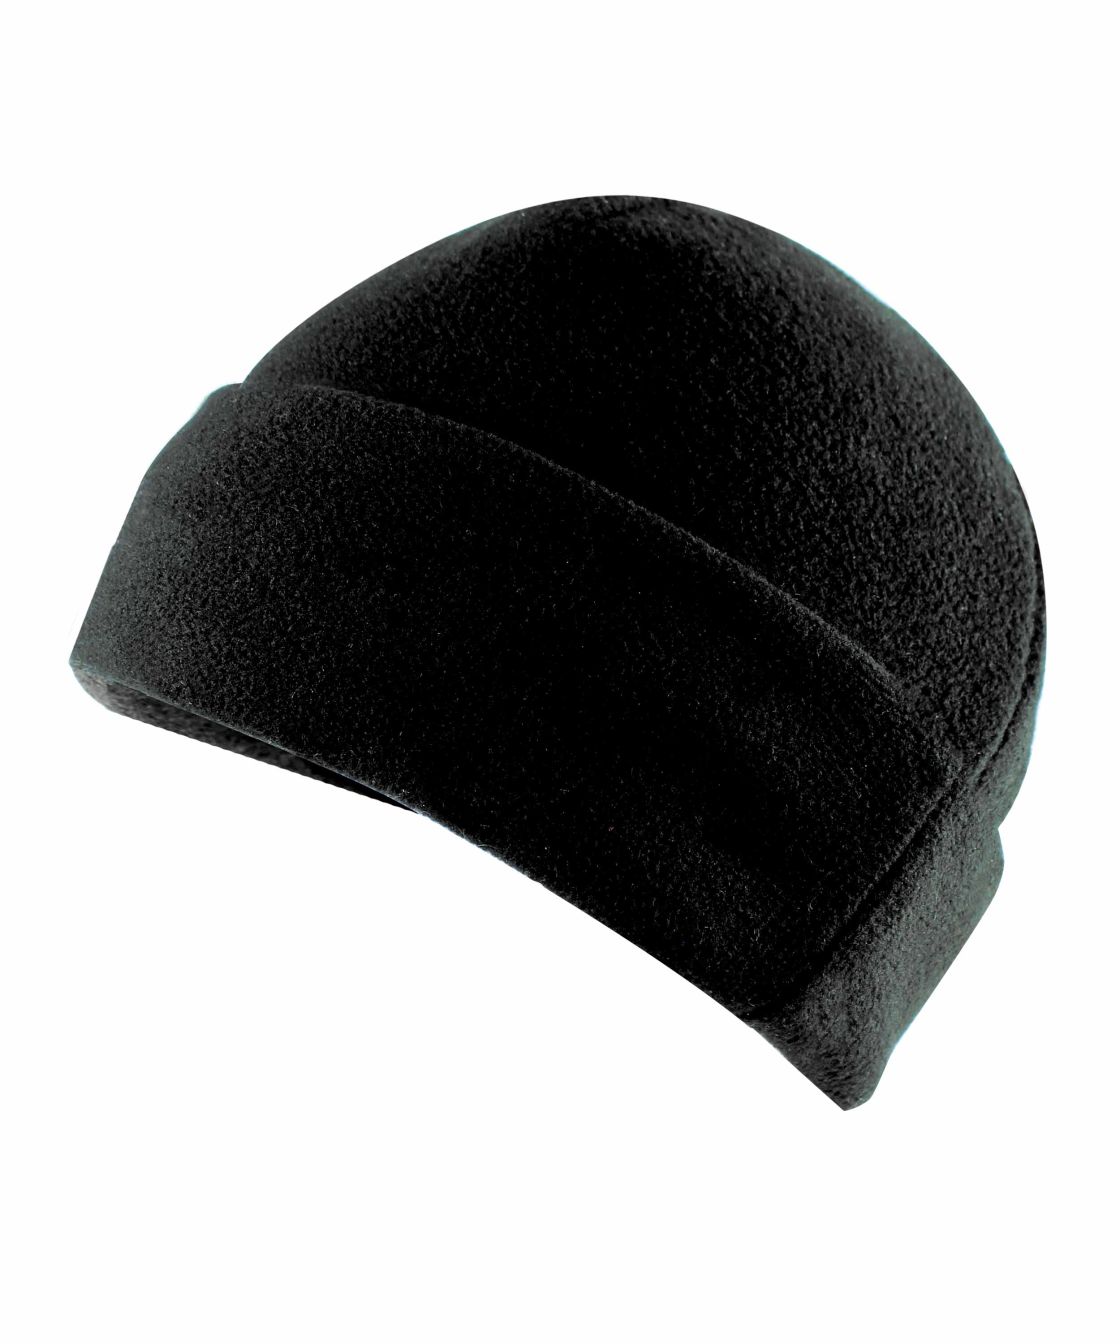 Fleece-Mütze, schwarz, schwarz